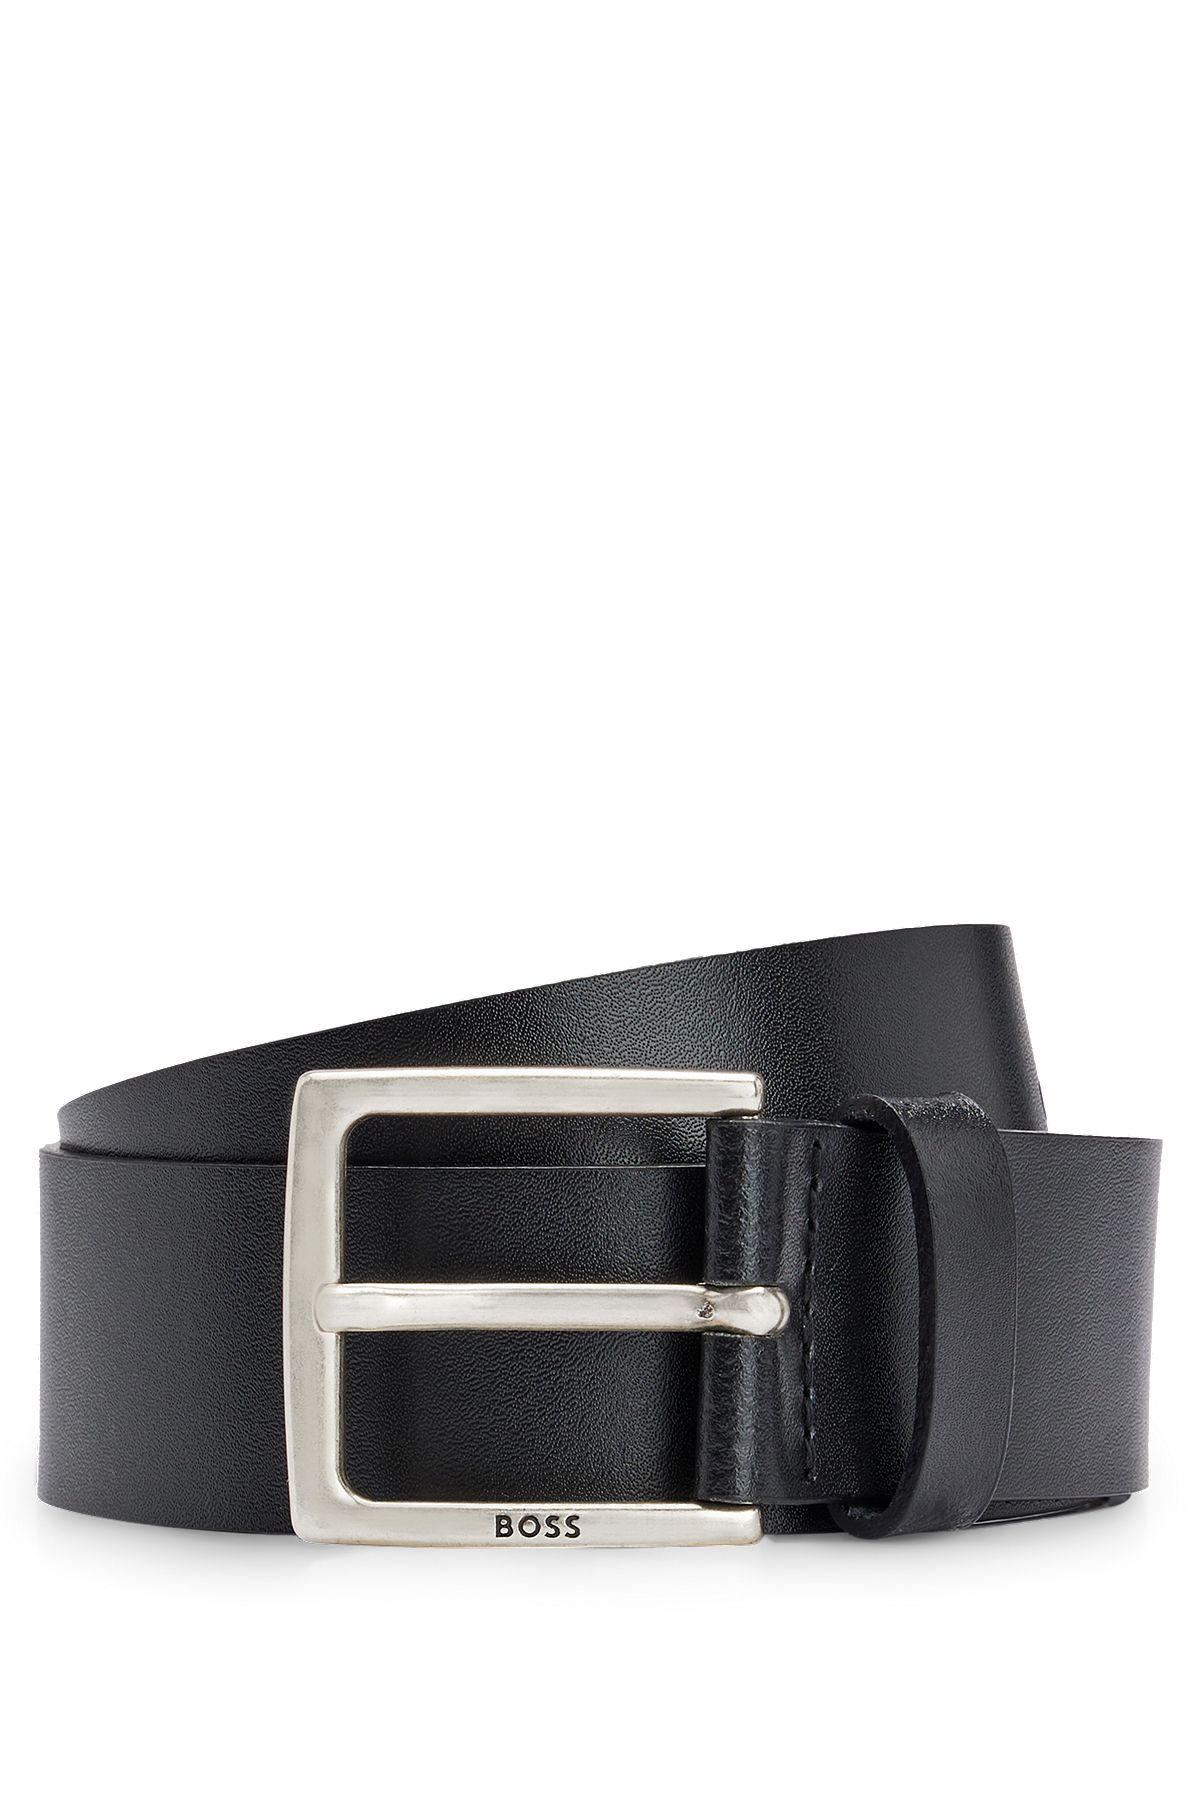 Italian-leather belt with antique-effect hardware, Black